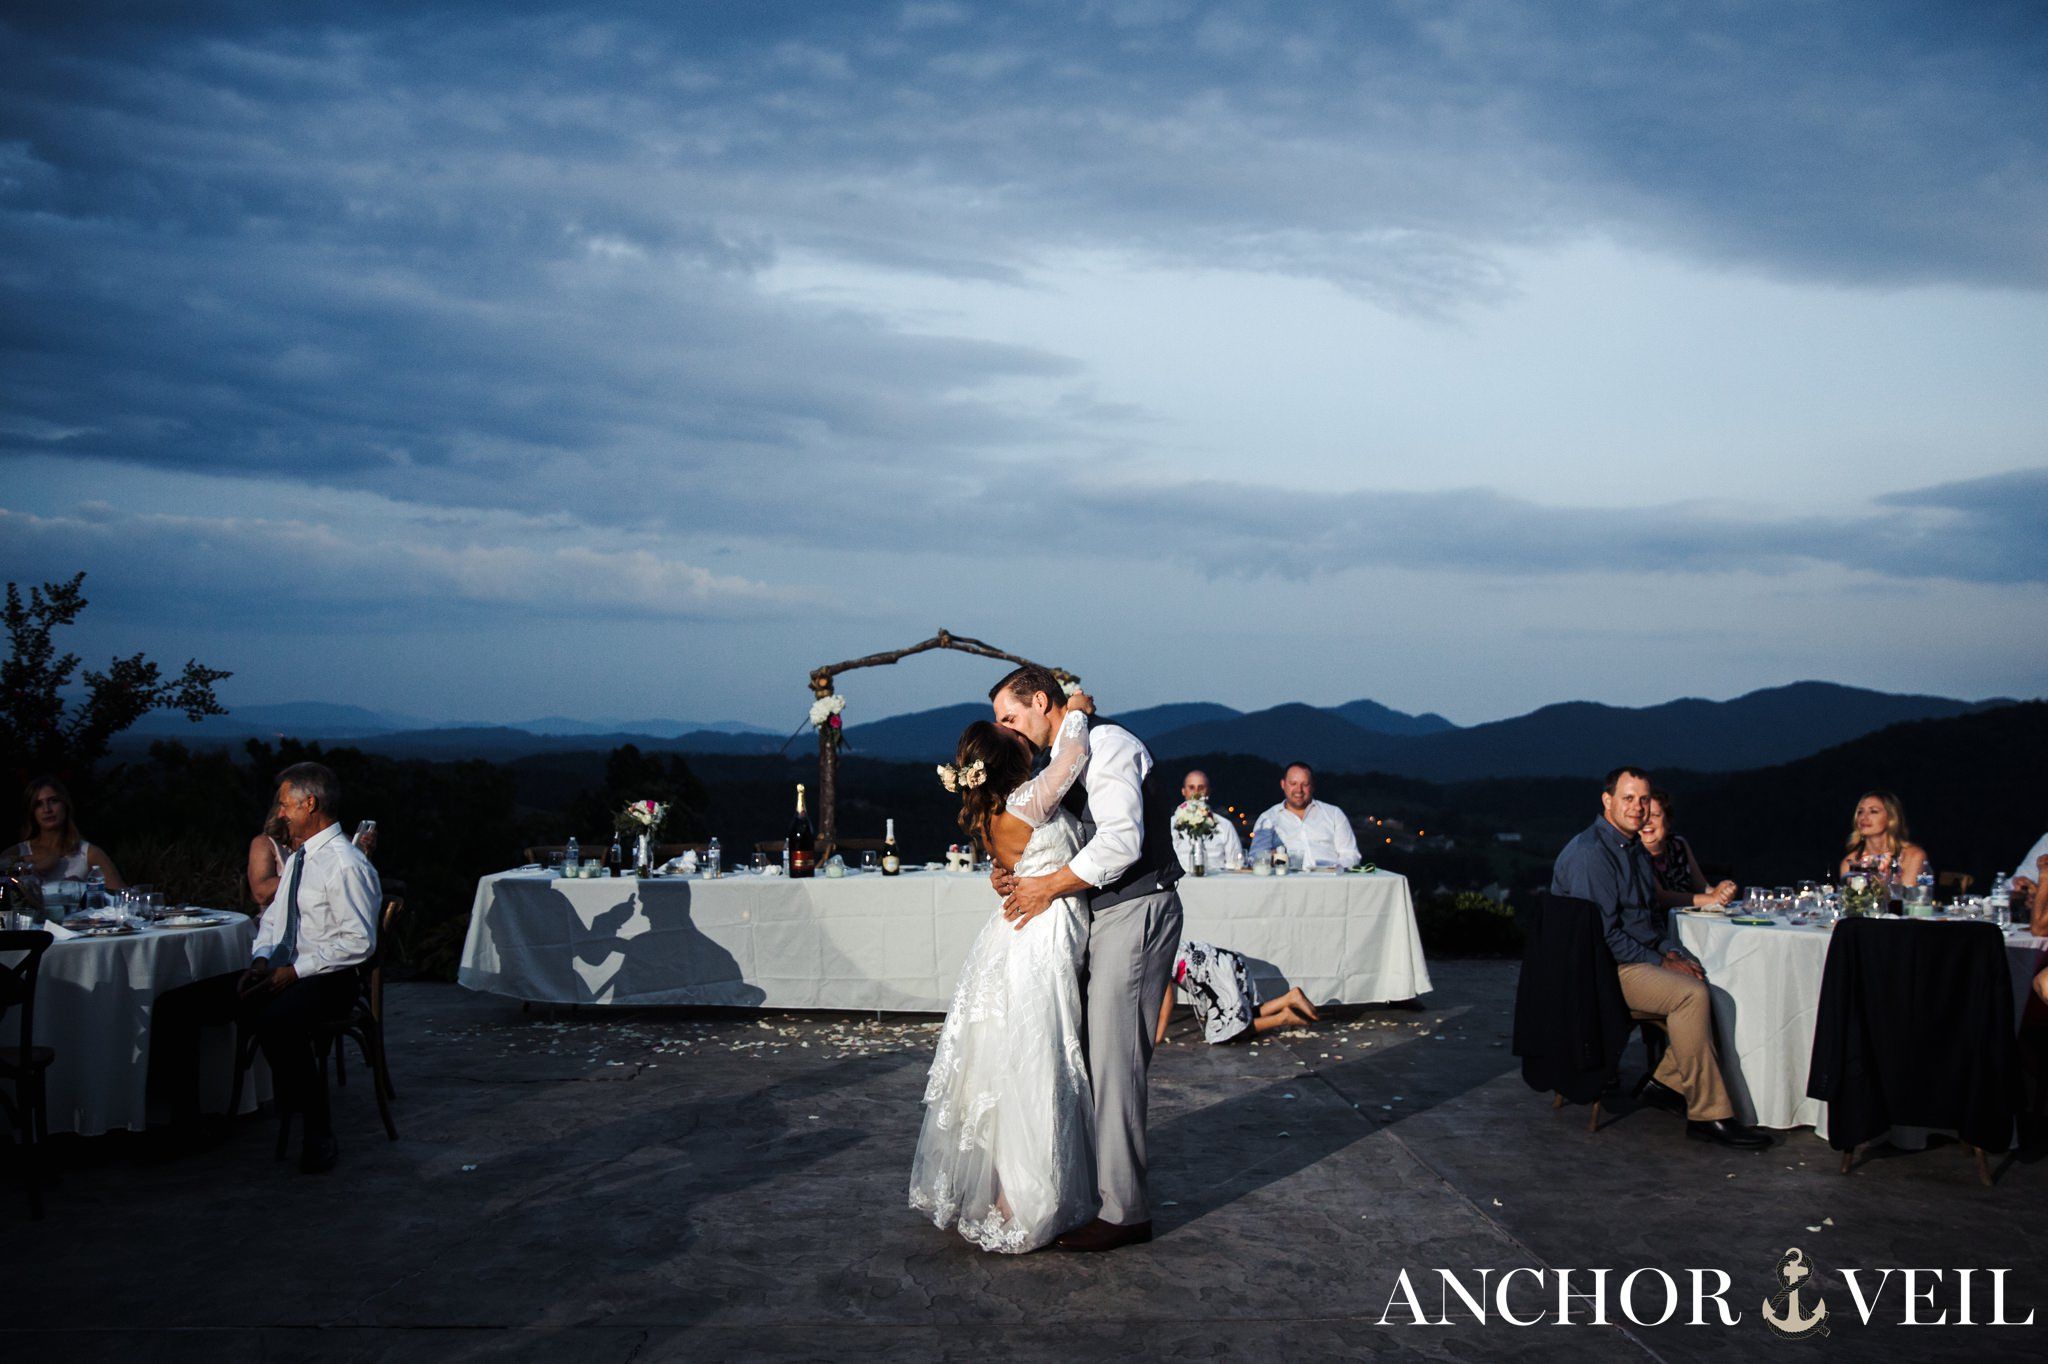 first dance overlooking the mountains asheville mountains destination wedding